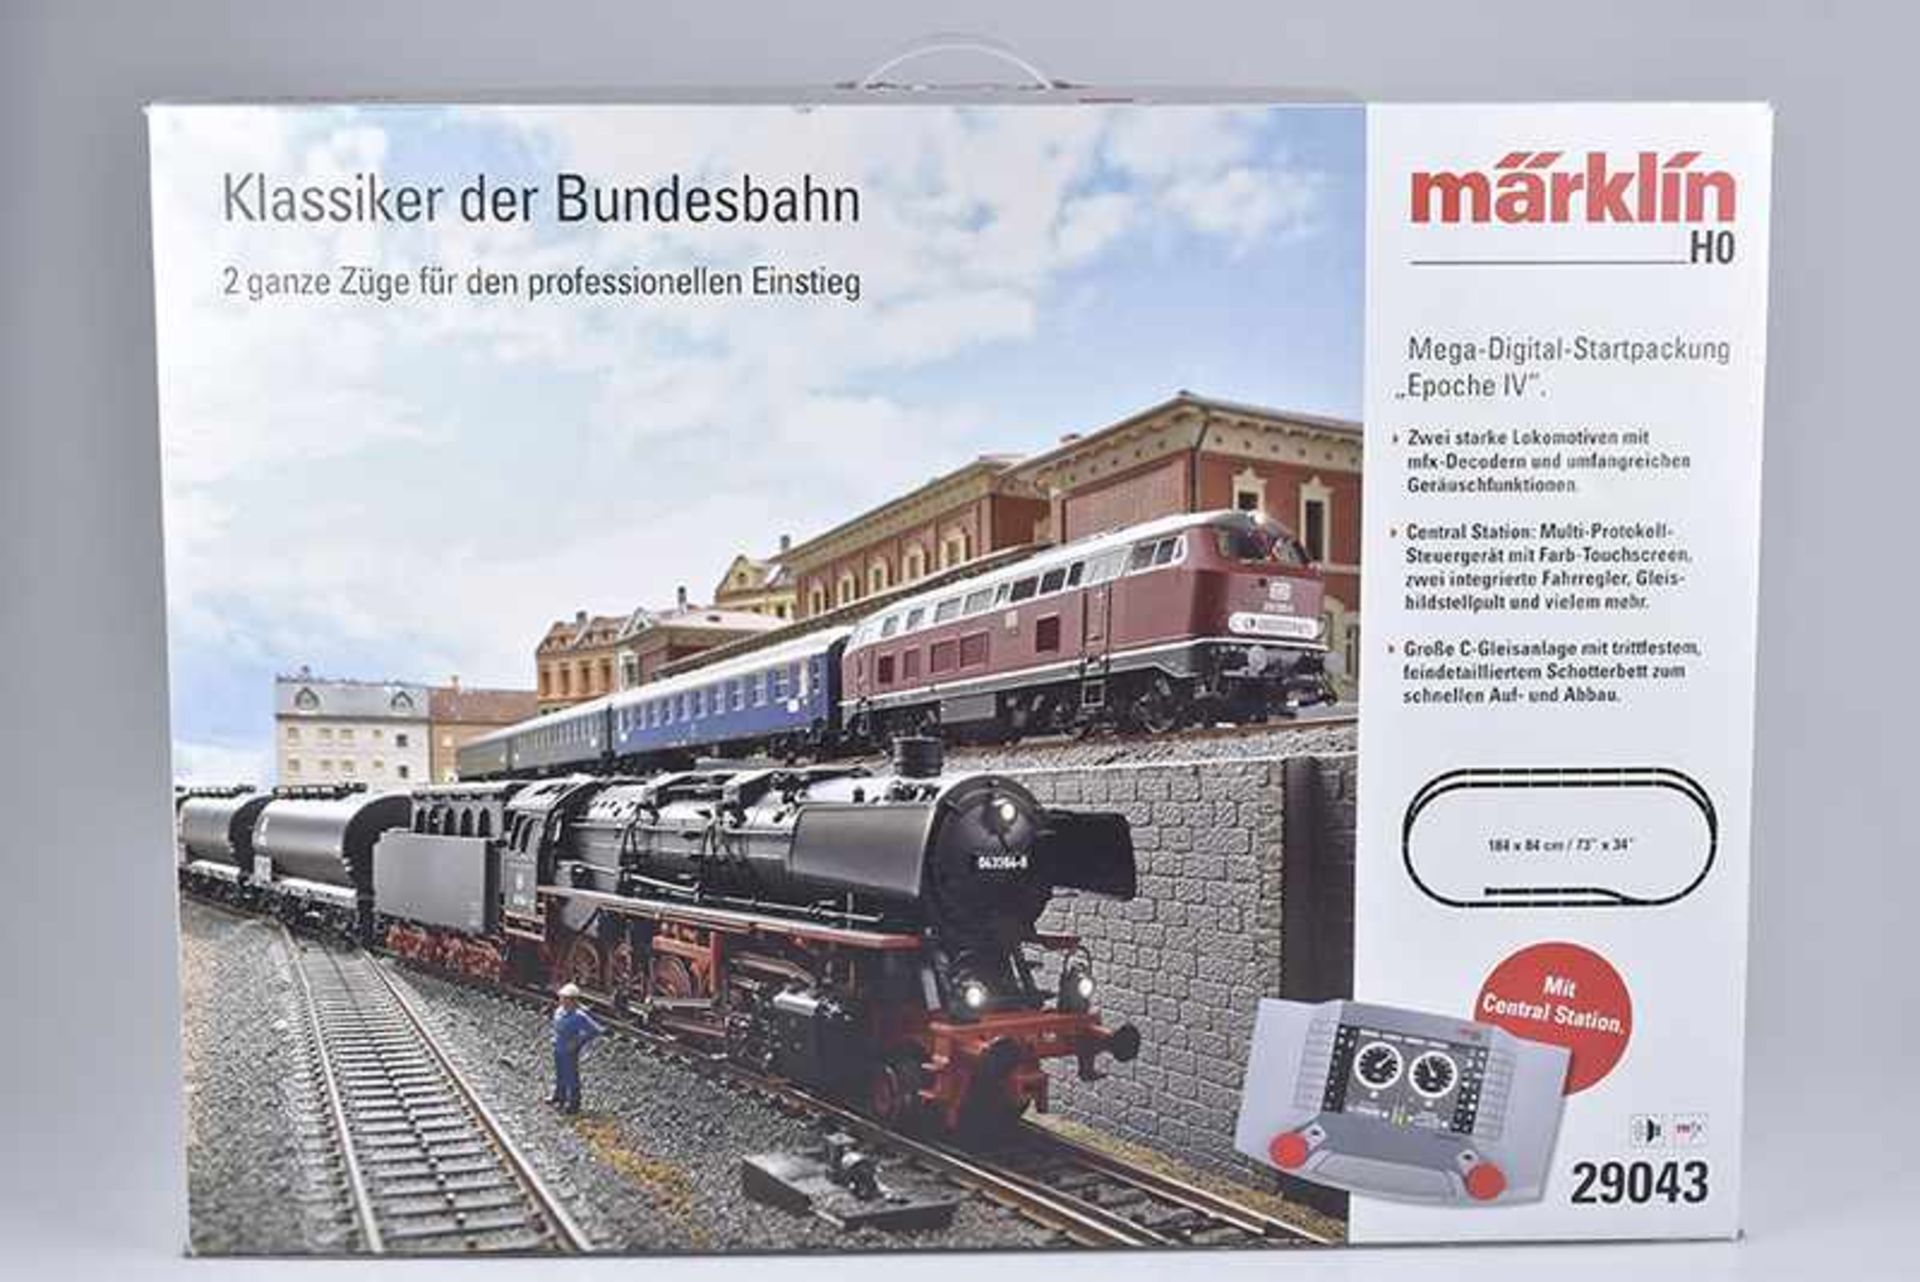 MÄRKLIN Digital-Startpackung "Epoche IV" 29043, H0, Komplette Digital-Eisenbahn: 2 komplette